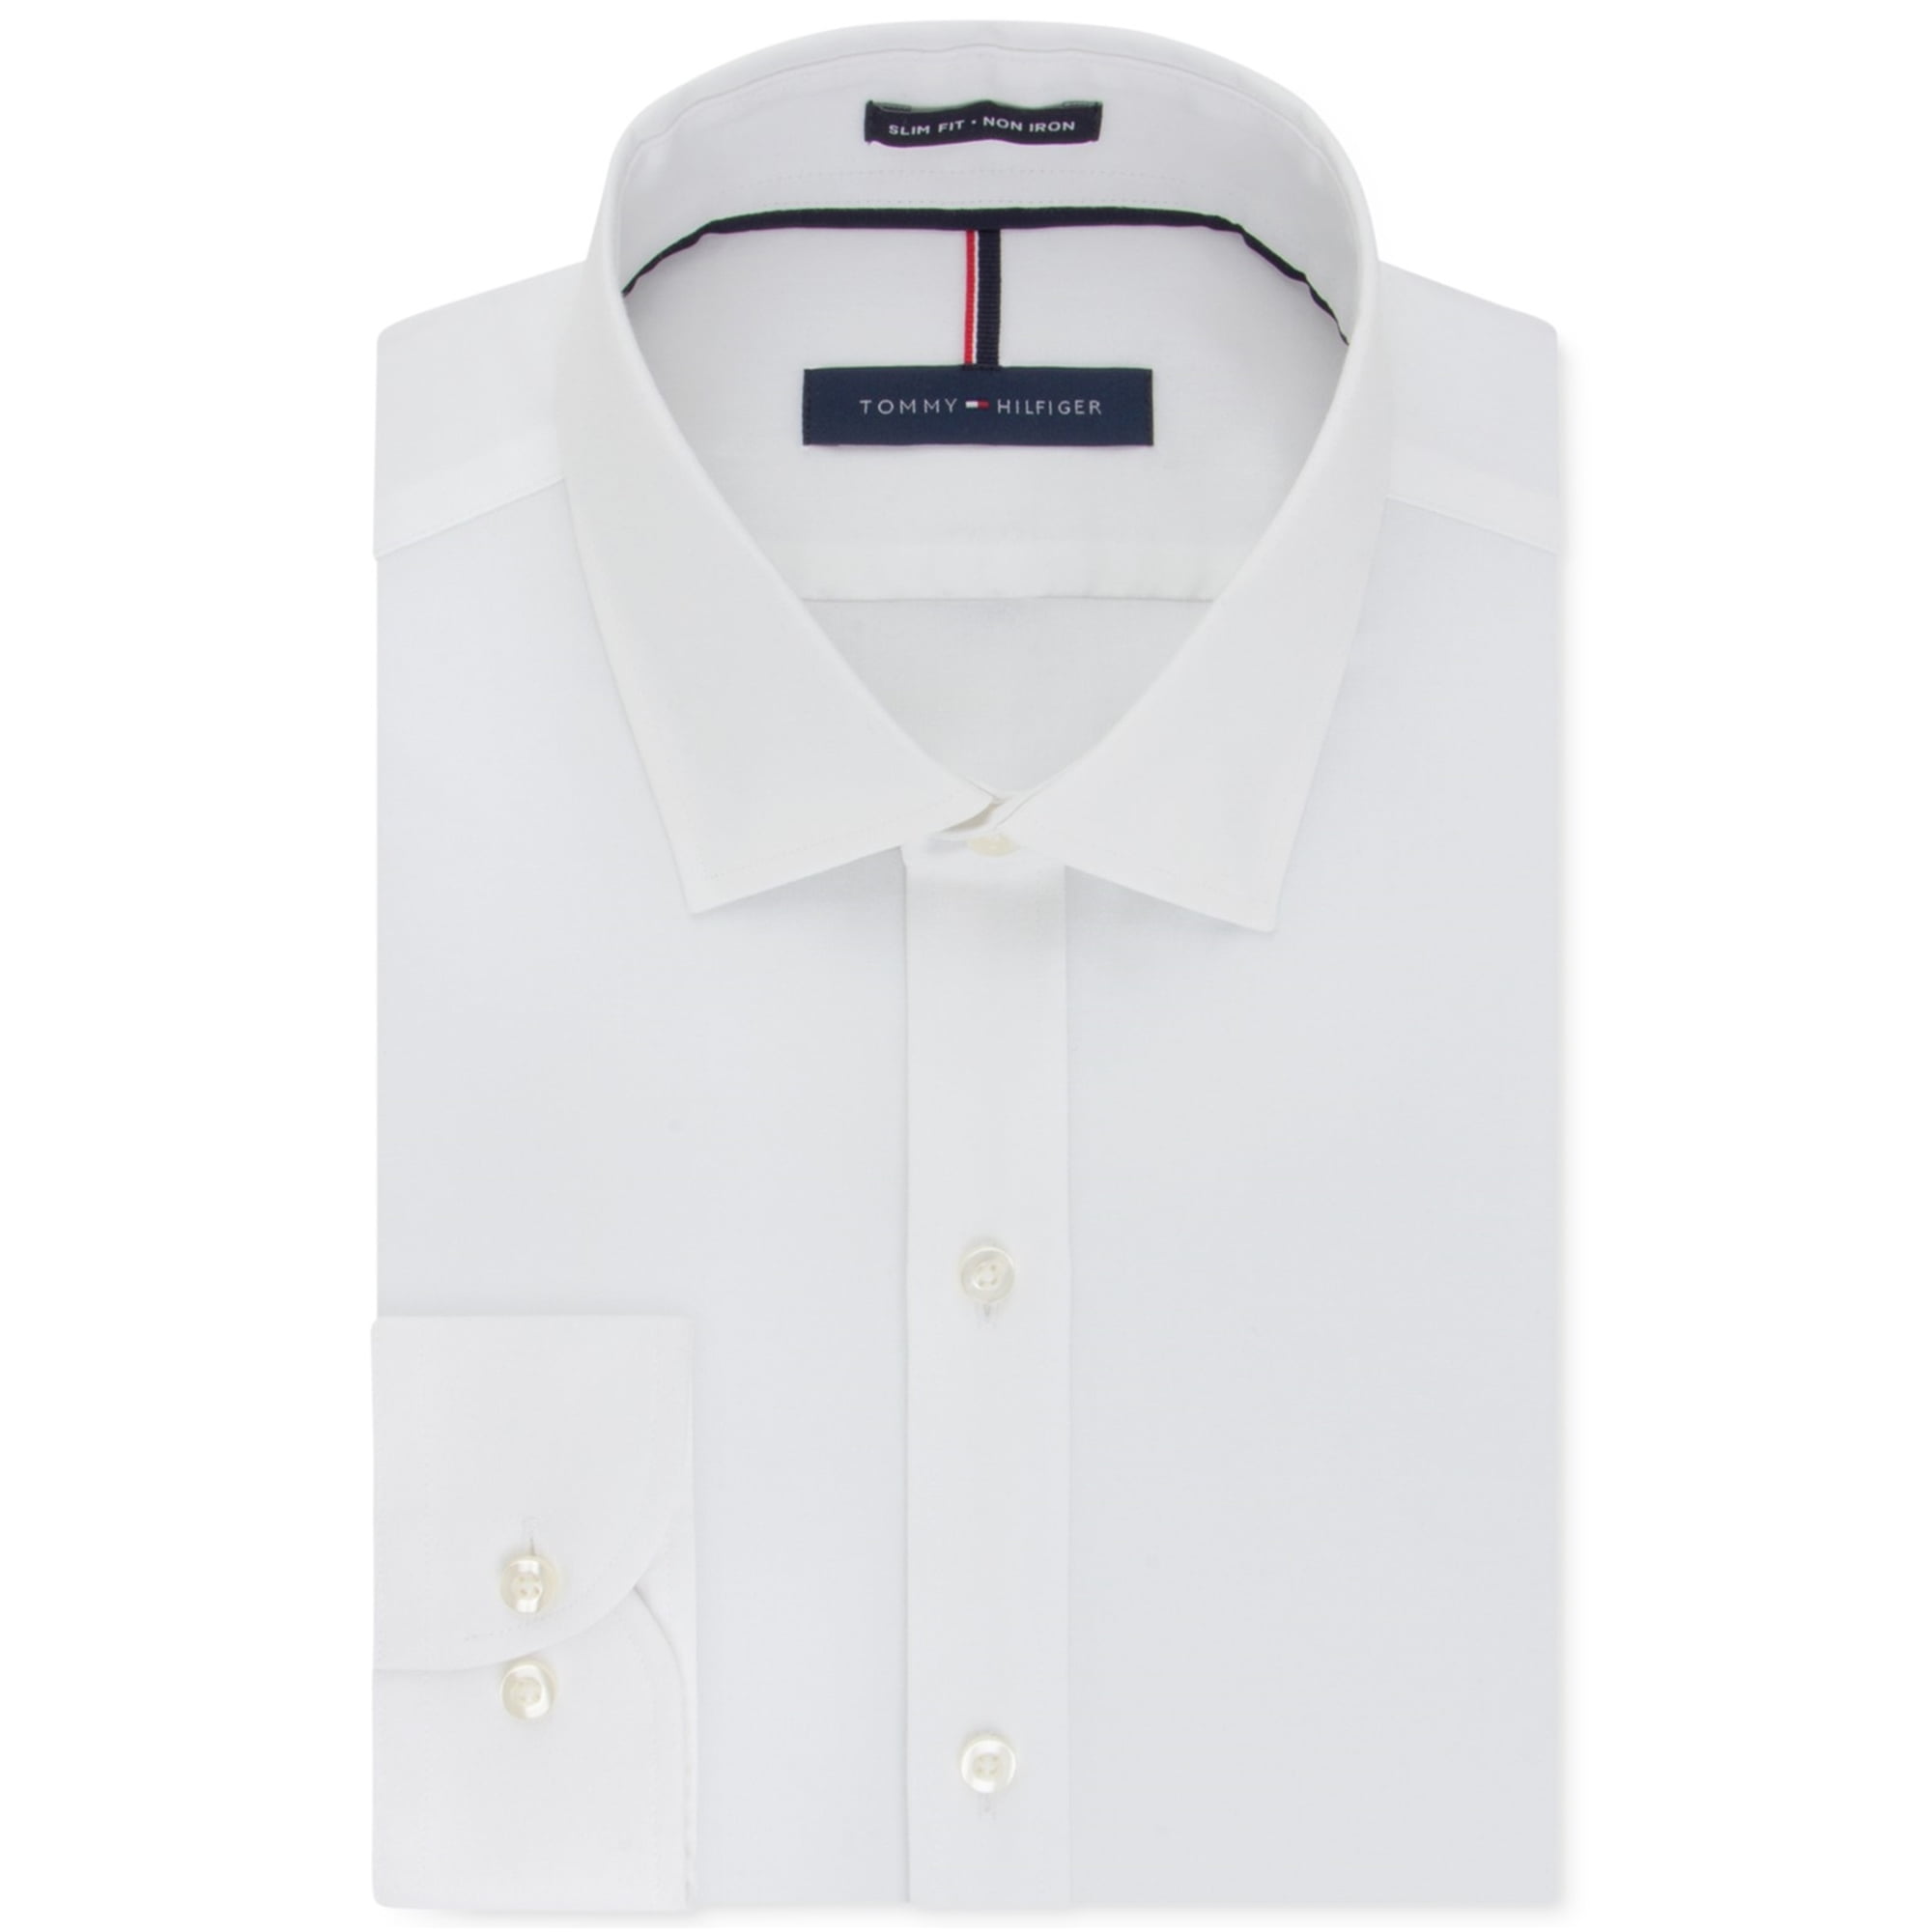 Tommy Hilfiger Mens Slim-Fit Non-Iron Button Up Dress Shirt white 16